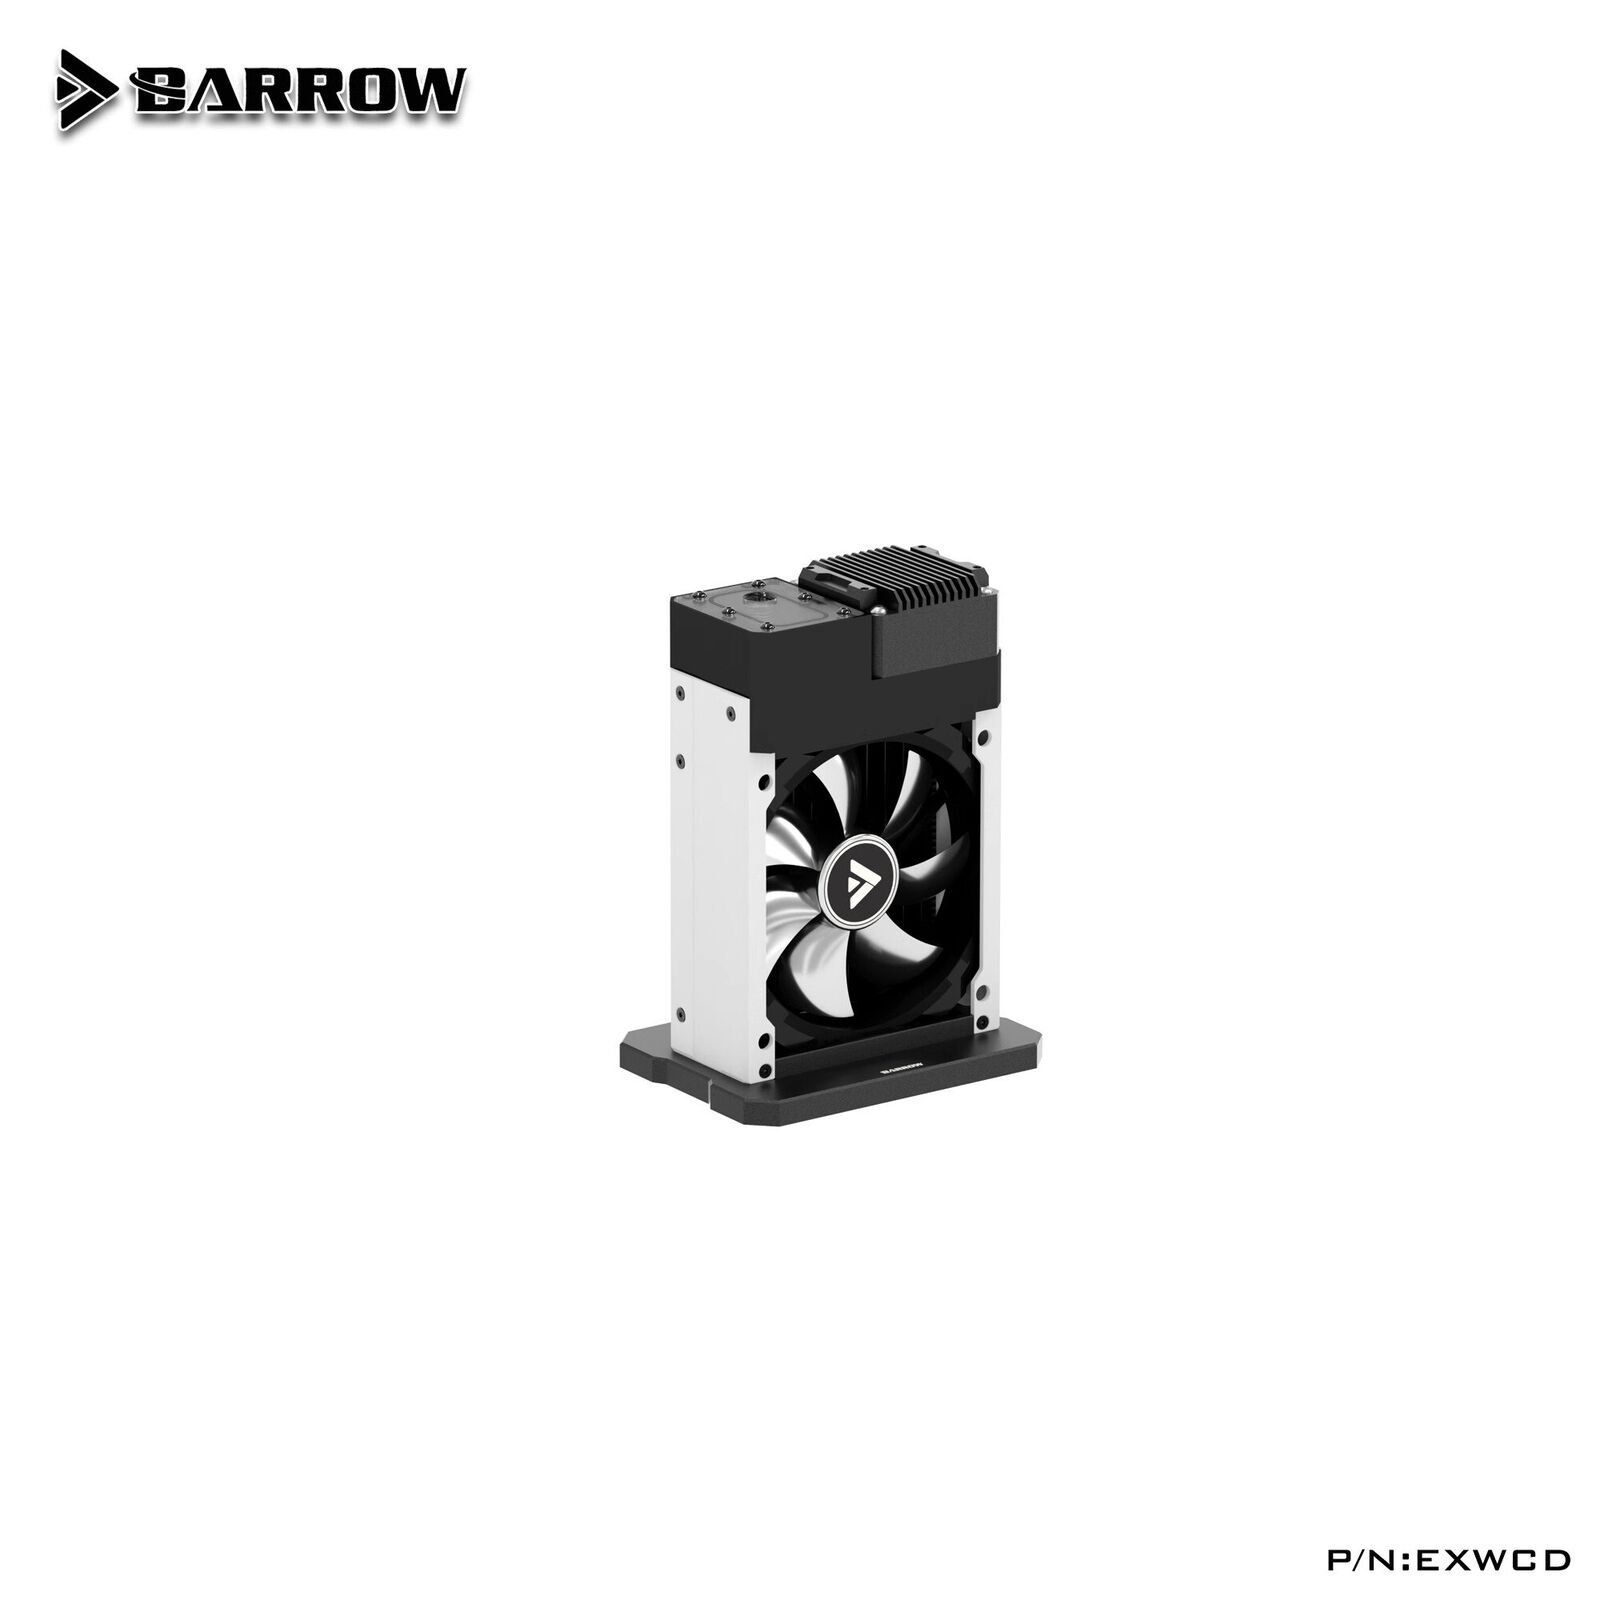 Barrow 120mm External Liquid Cooling Station, 120mm x 1 FAN ,17W PWM Pump, EXWCD